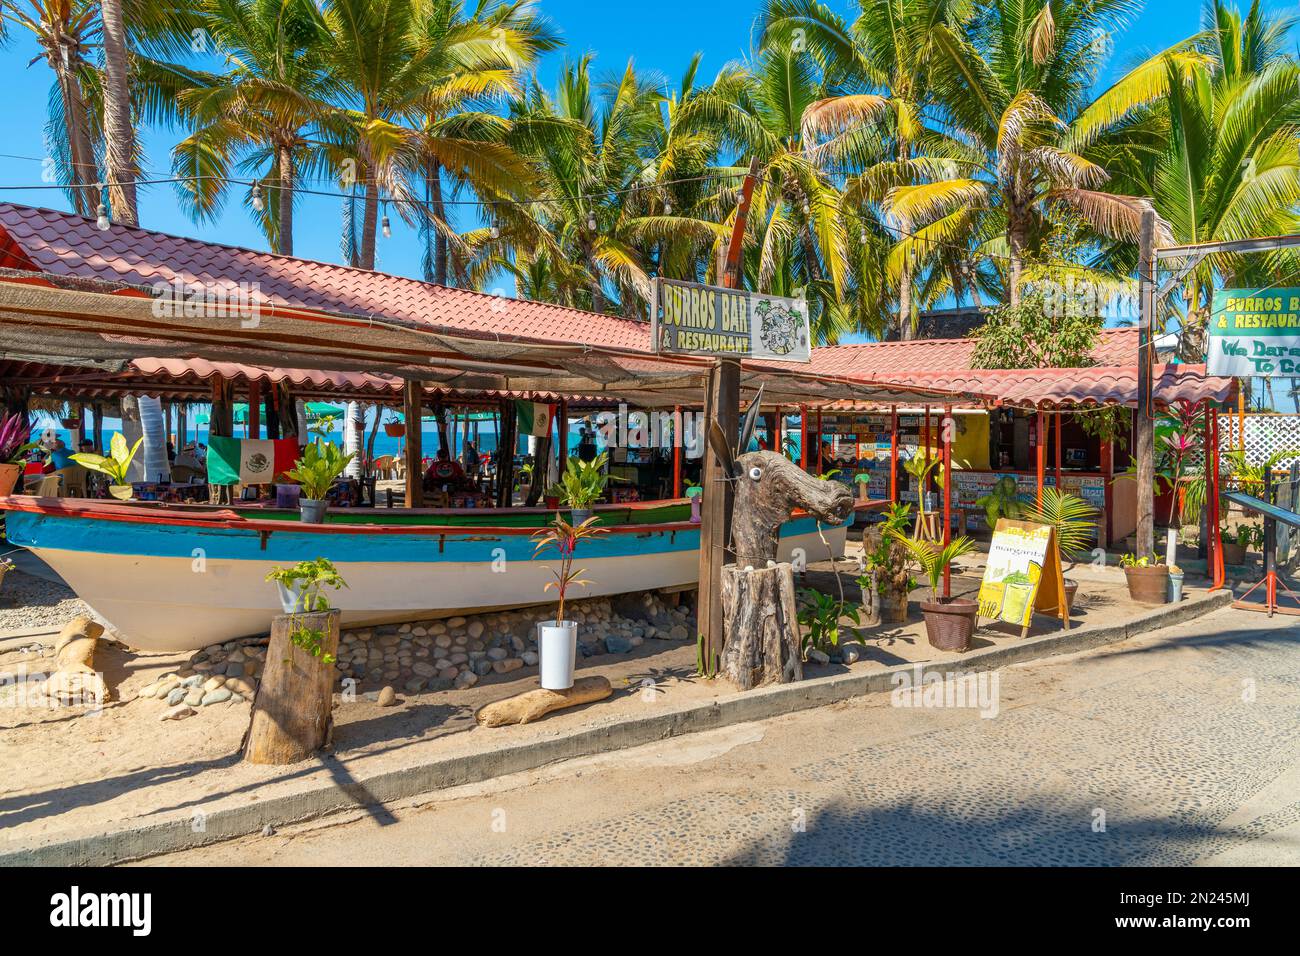 The Burros Bar and Restaurant on the touristic Olas Altas street along Los Muertos beach in the Zona Romantica district of Puerto Vallarta, Mexico. Stock Photo